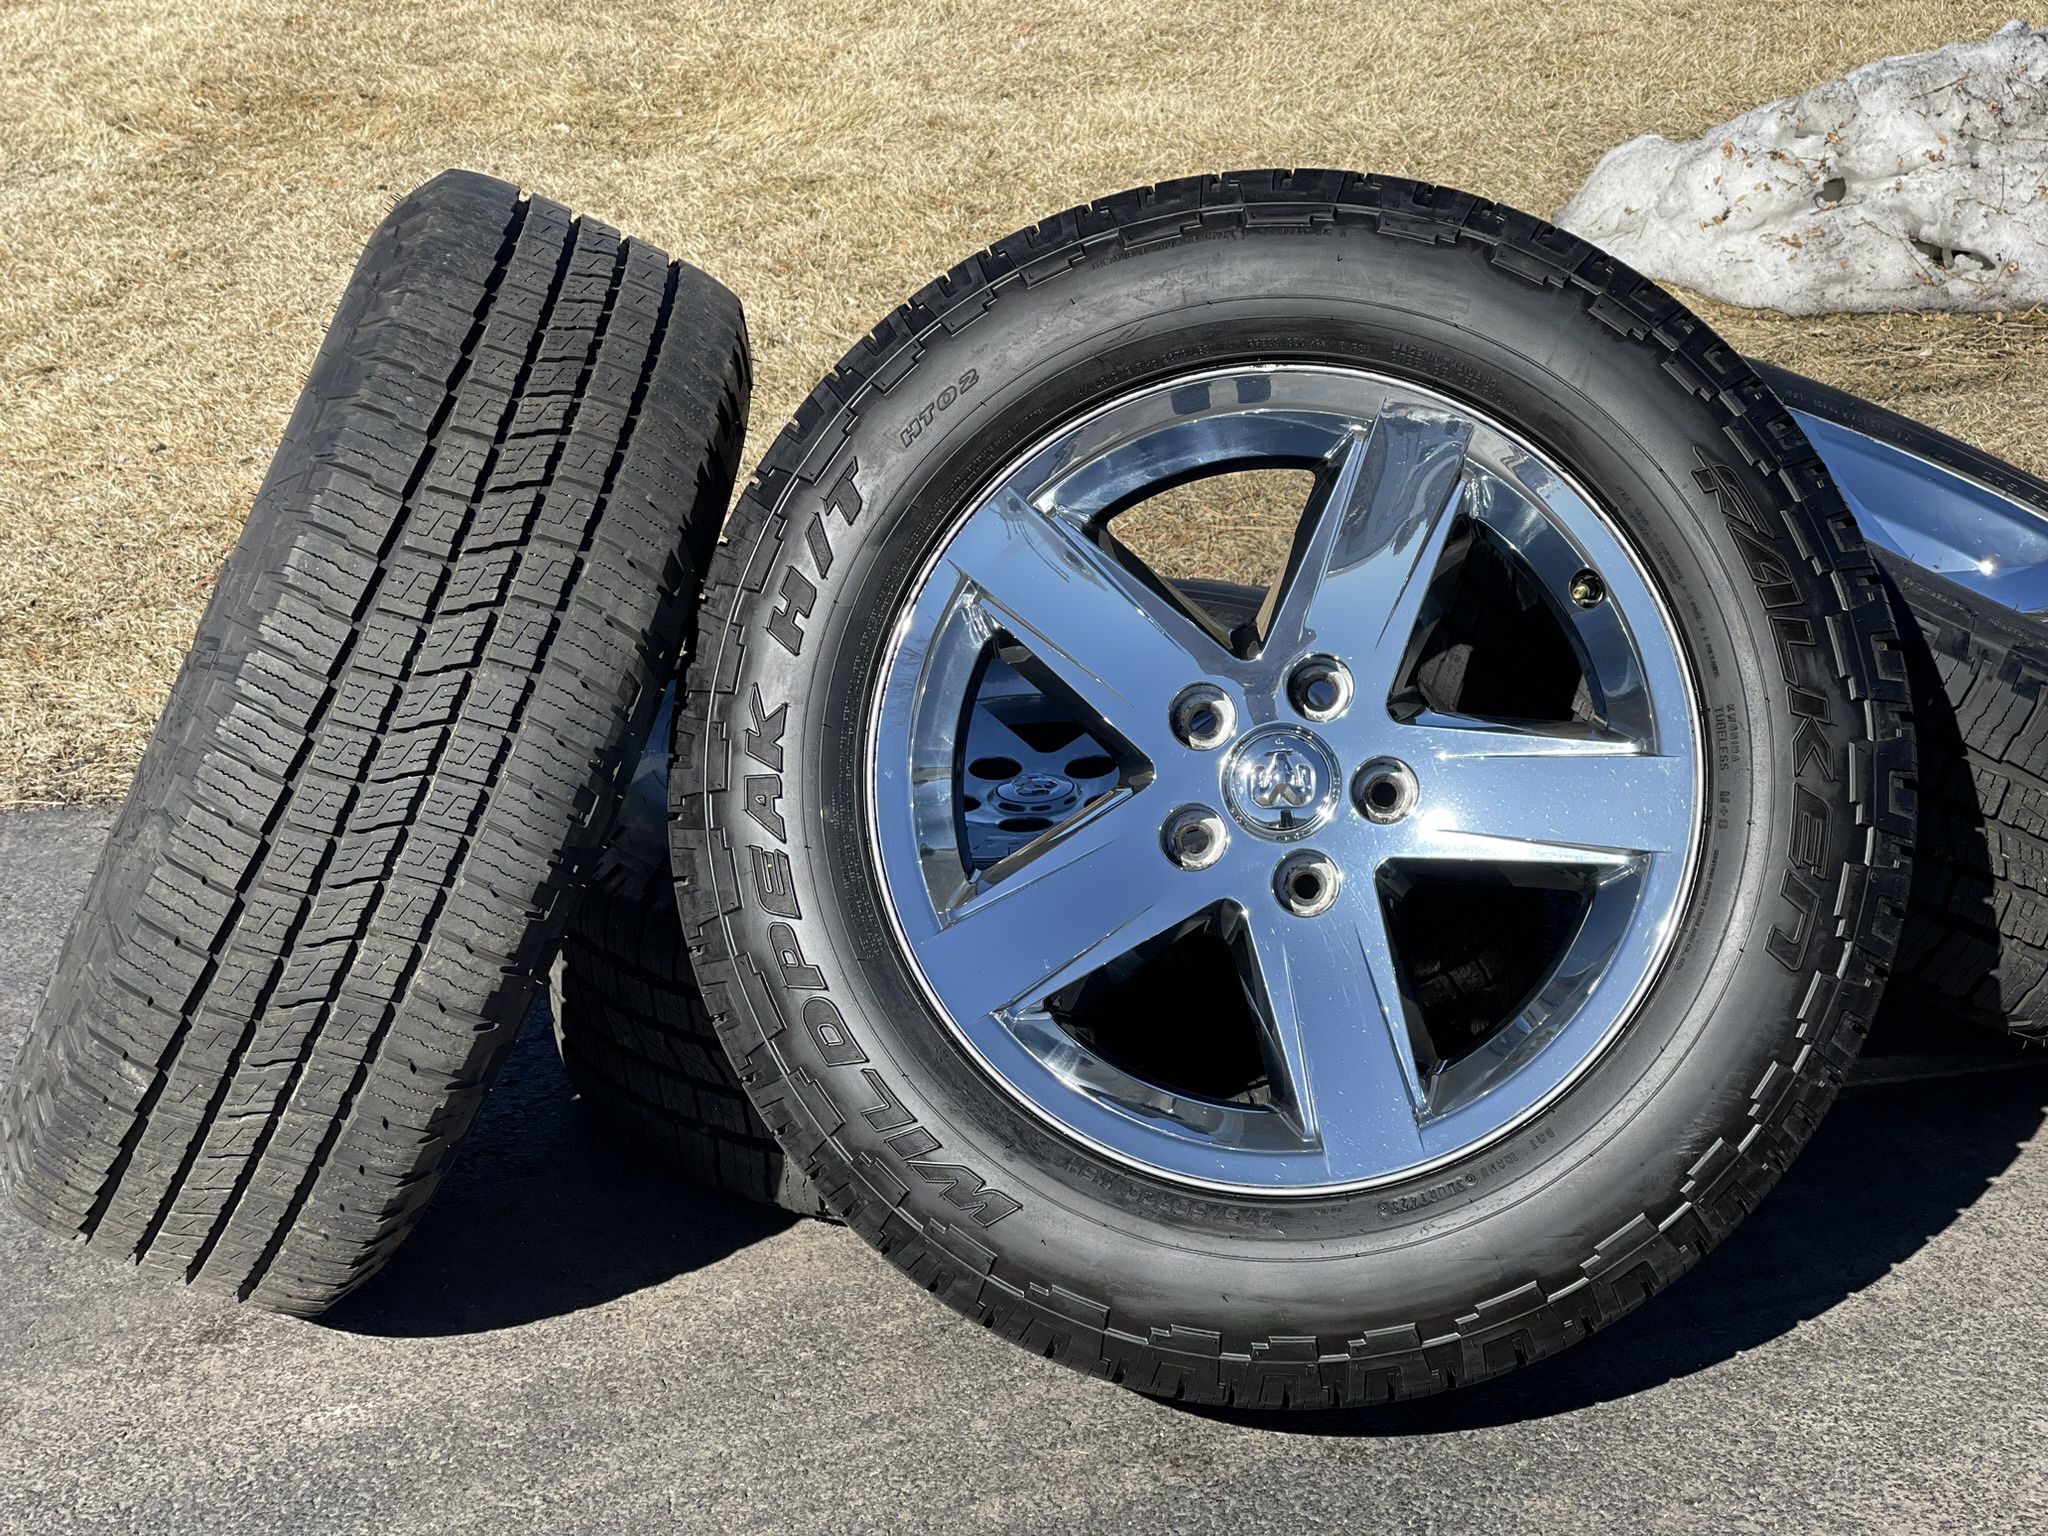 Like NEW Original 20” Dodge Ram 1500 Wheels Chrome 5x5.5 rims Falken Wildpeak tires 275/60R20 All Season 